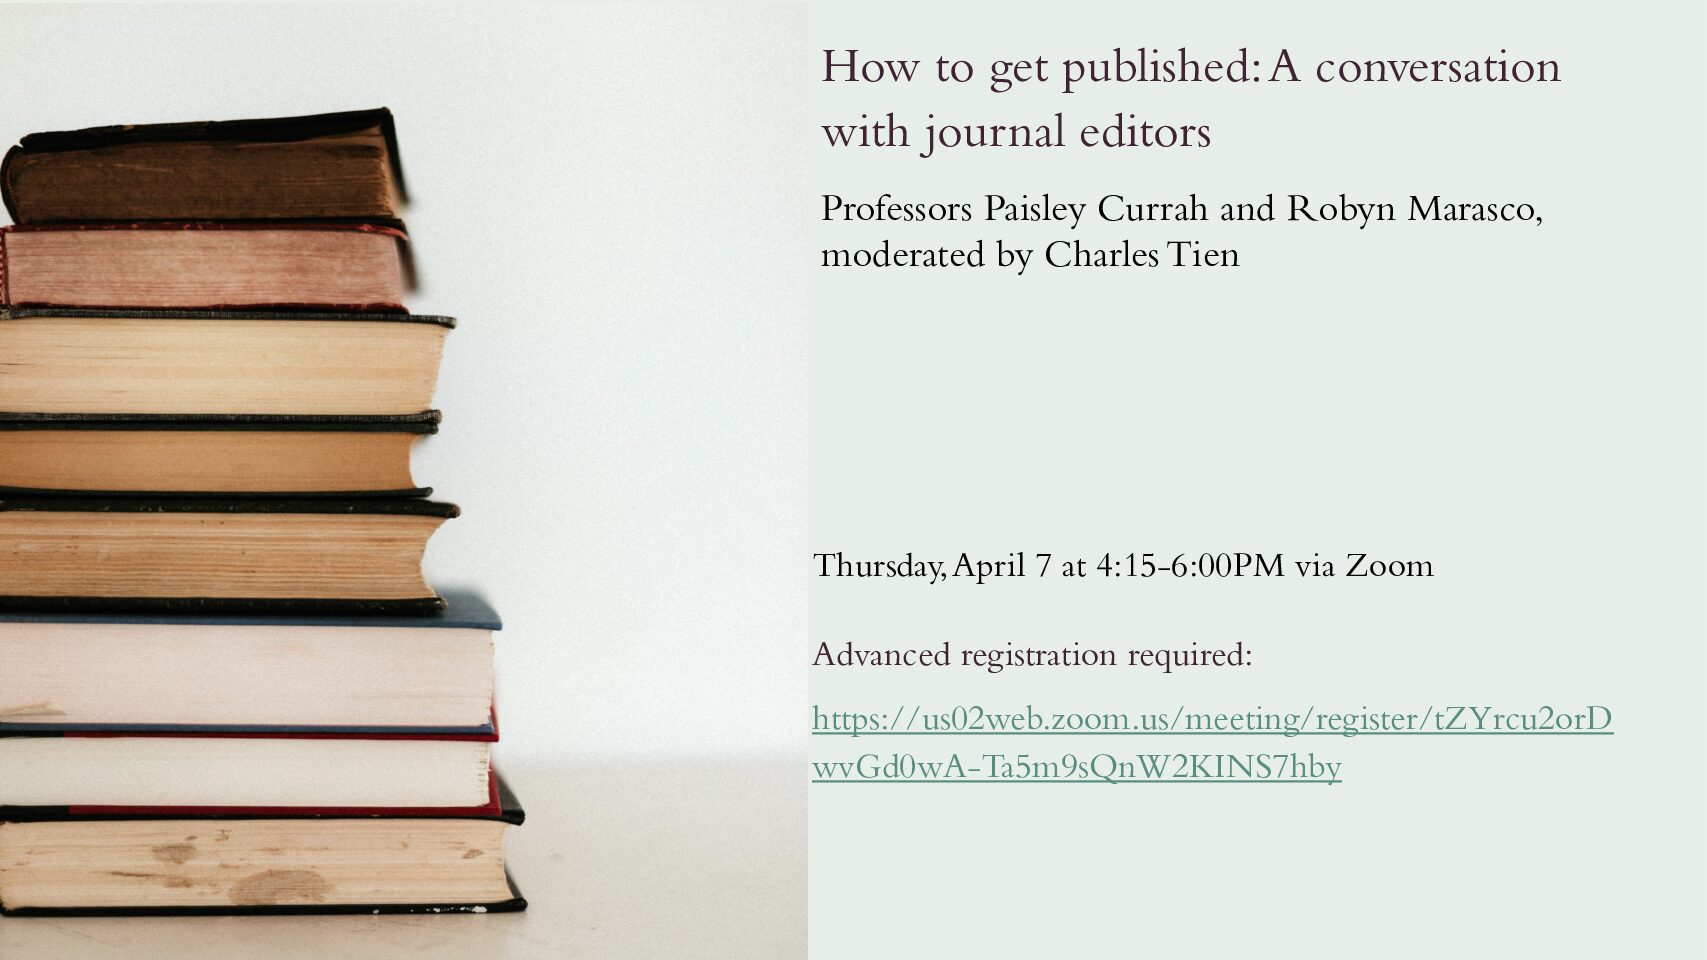 Professional Development Workshop, "How to get published: A conversation with journal editors," Thursday, April 7, 4:15-6:00PM